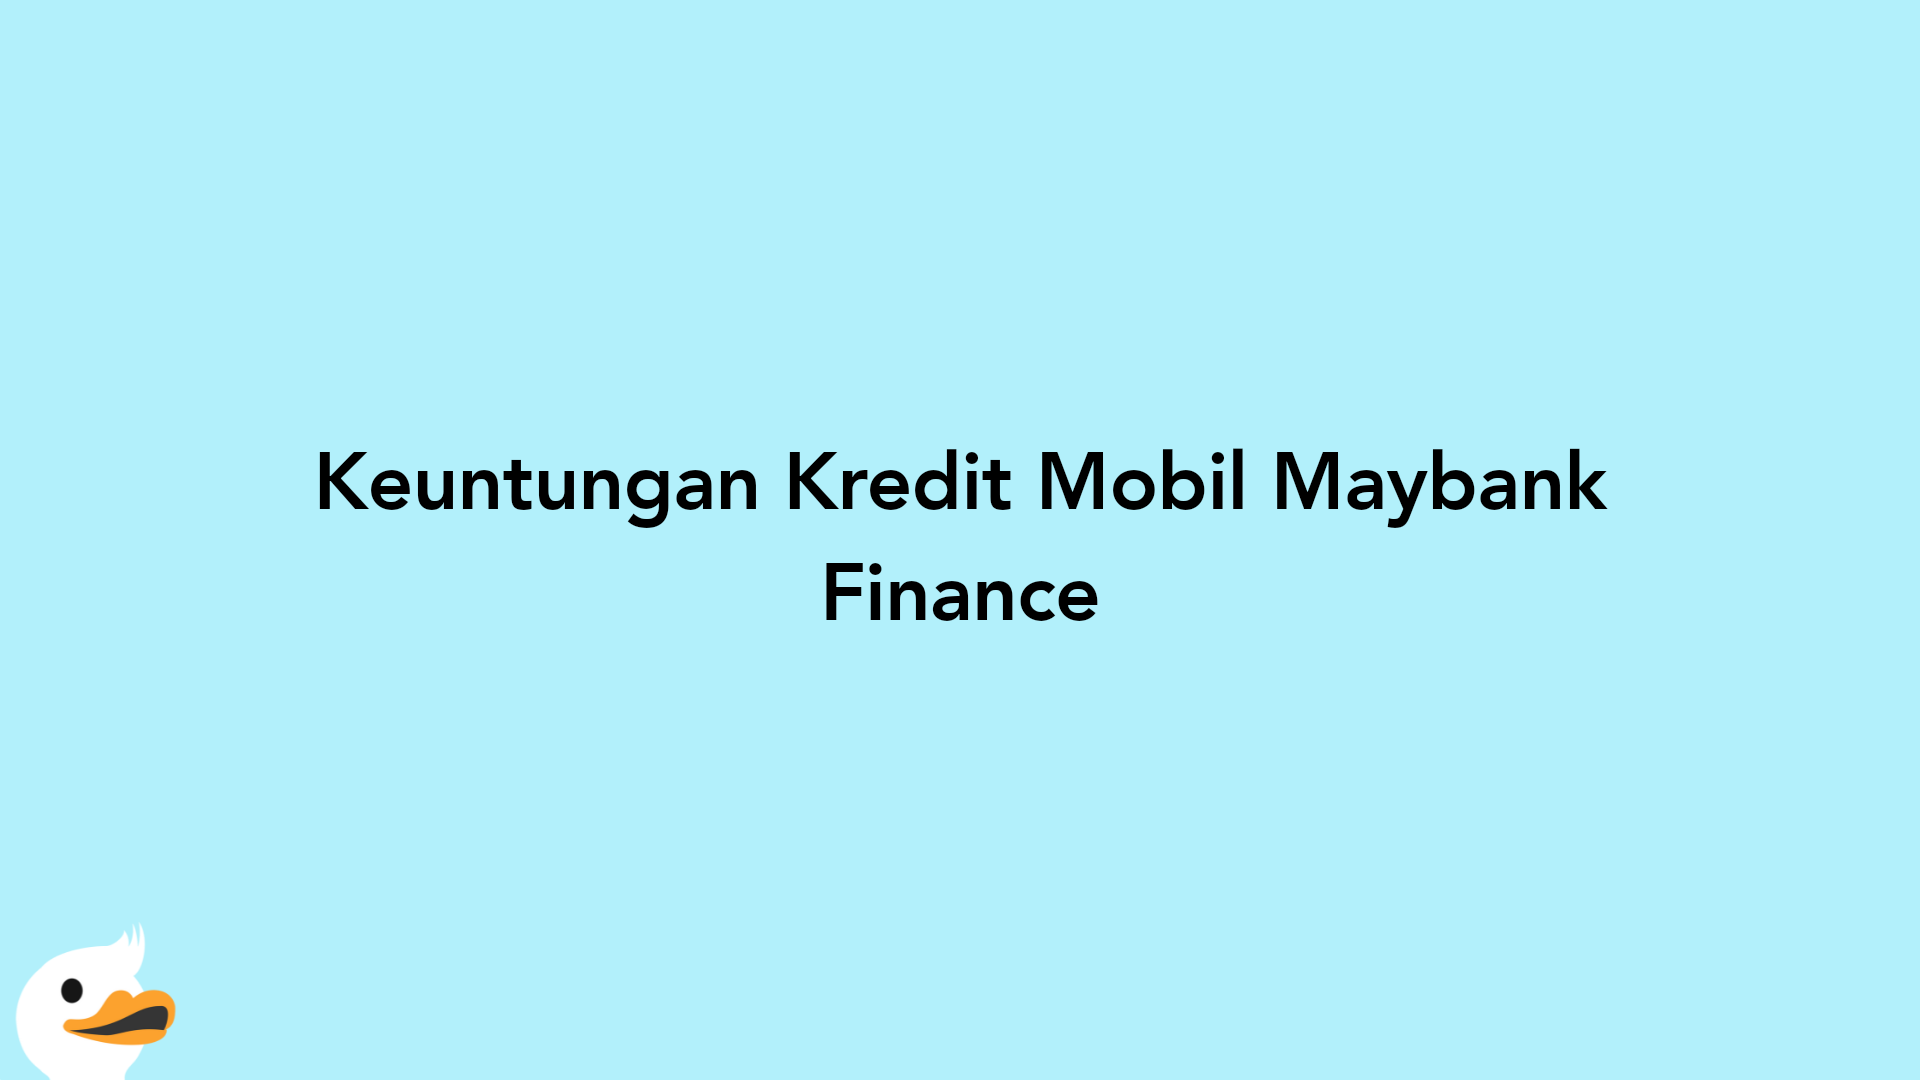 Keuntungan Kredit Mobil Maybank Finance